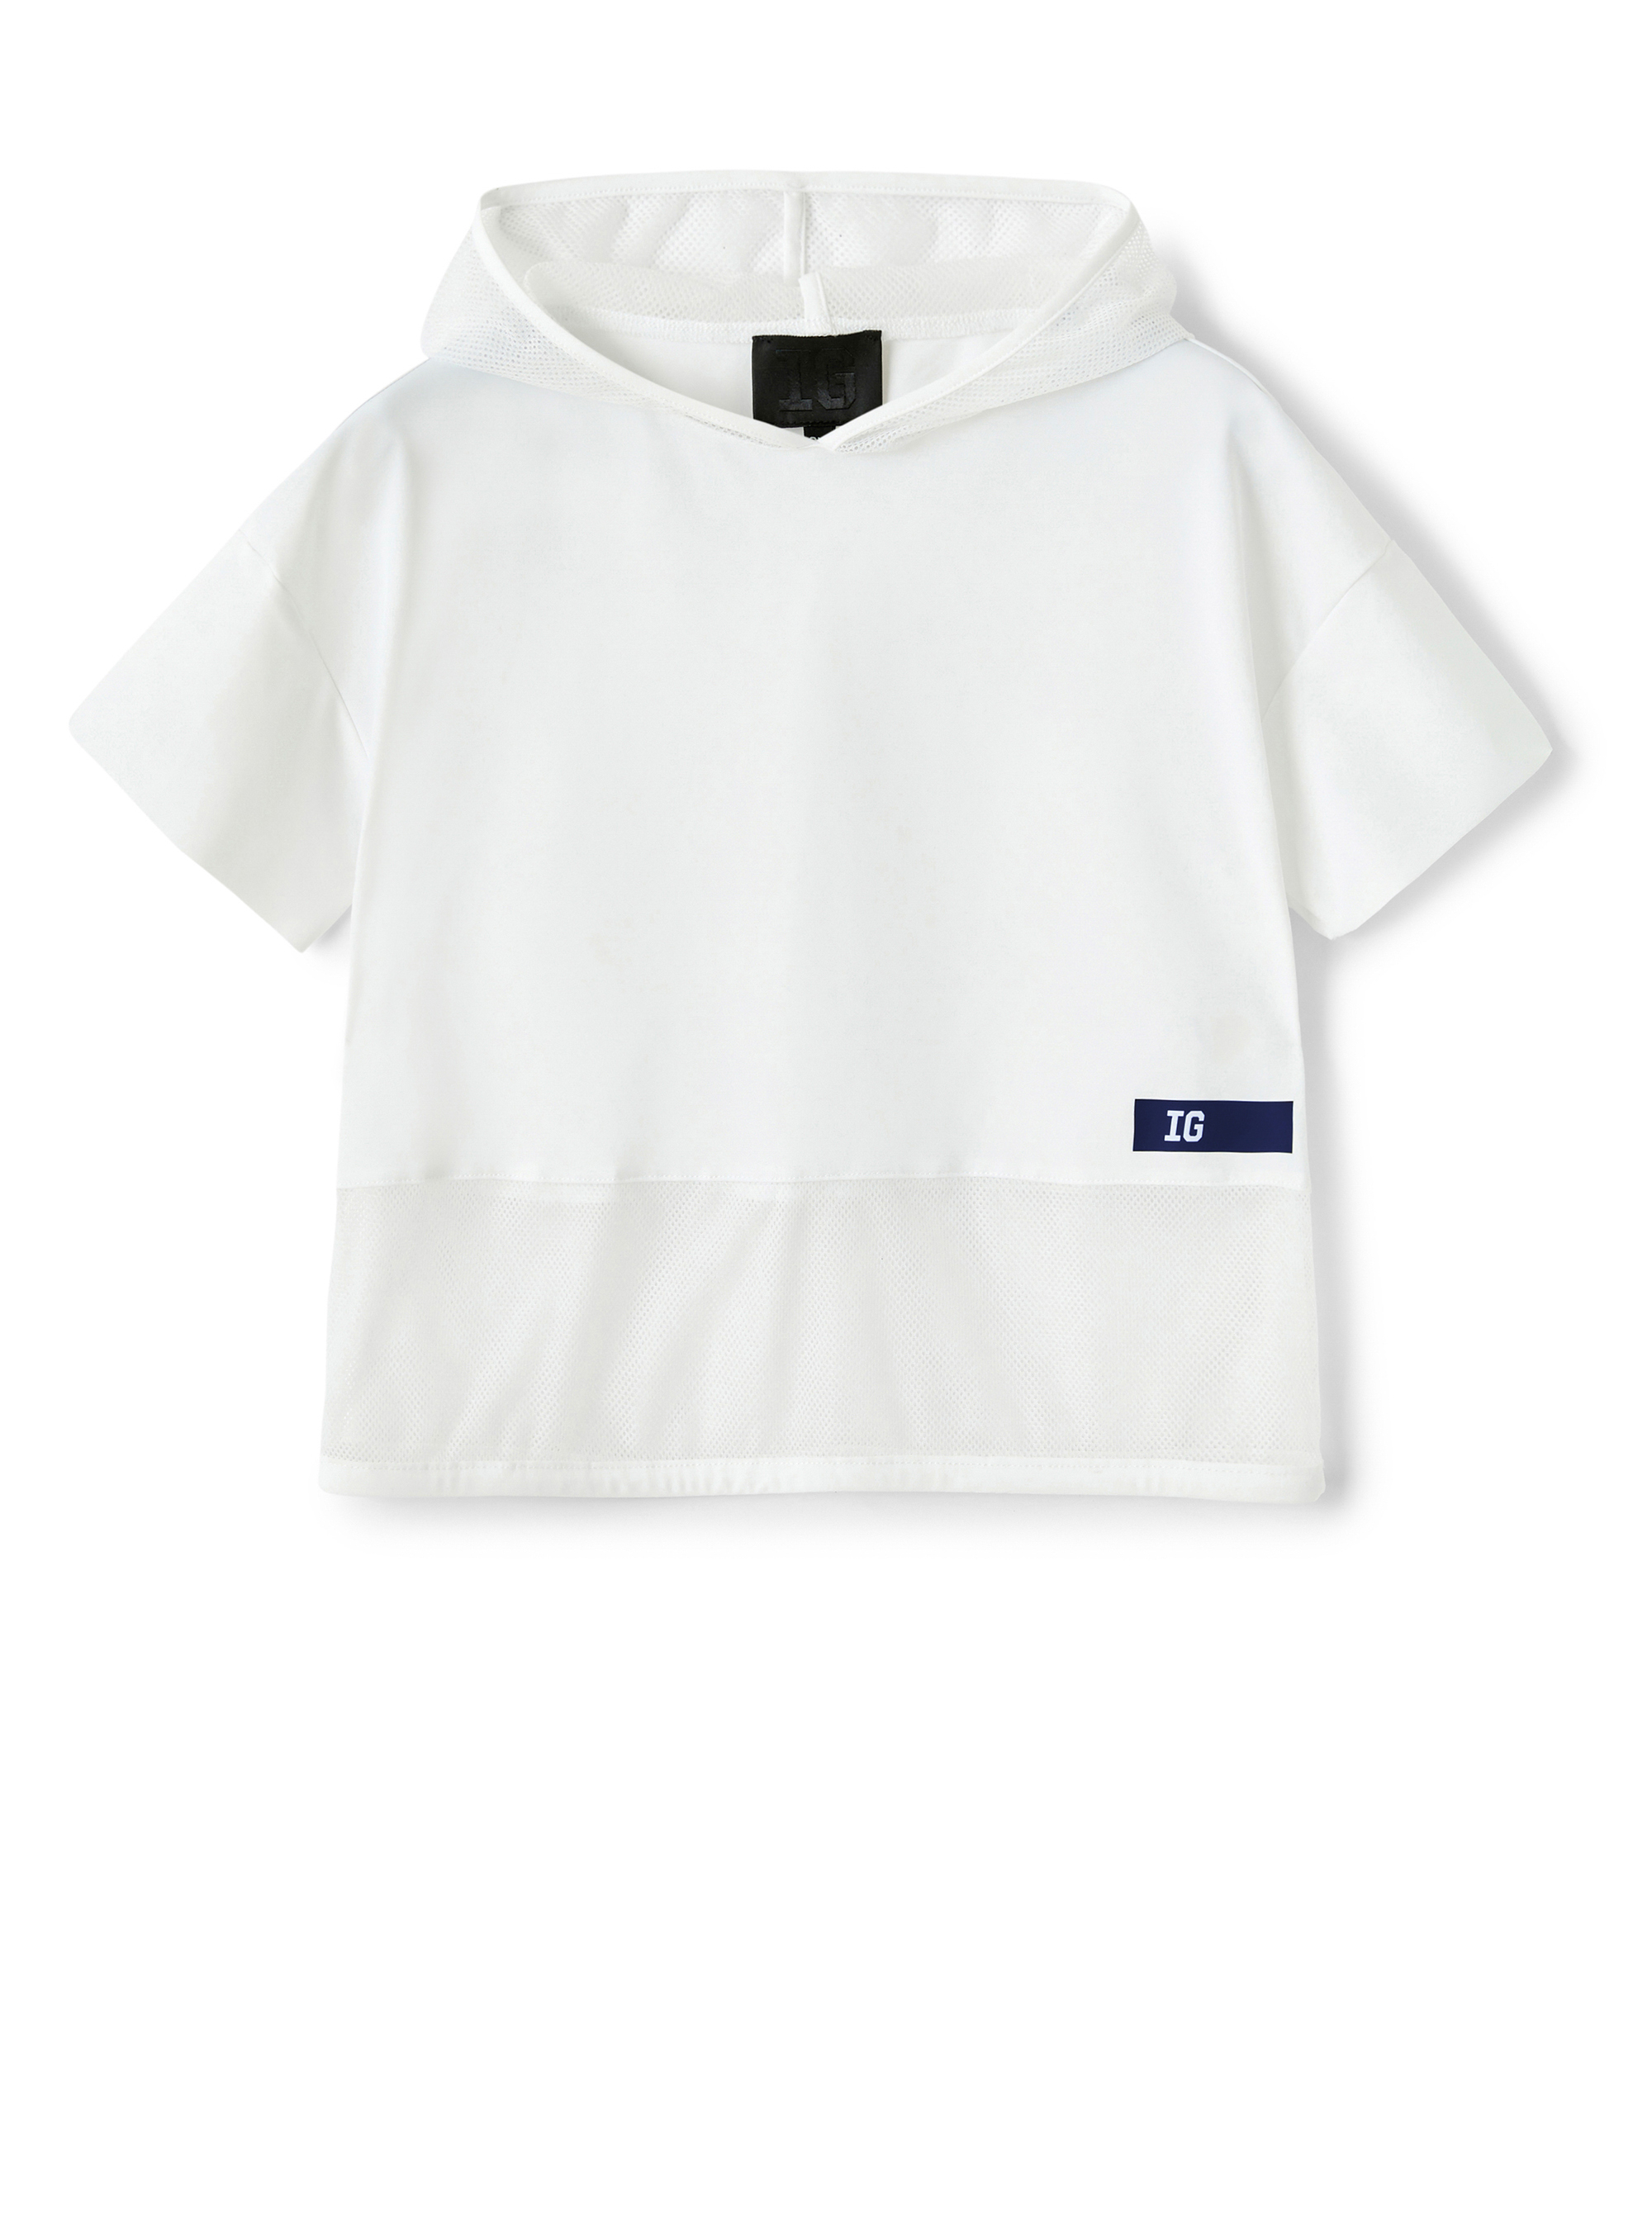 White t-shirt with hood - White | Il Gufo